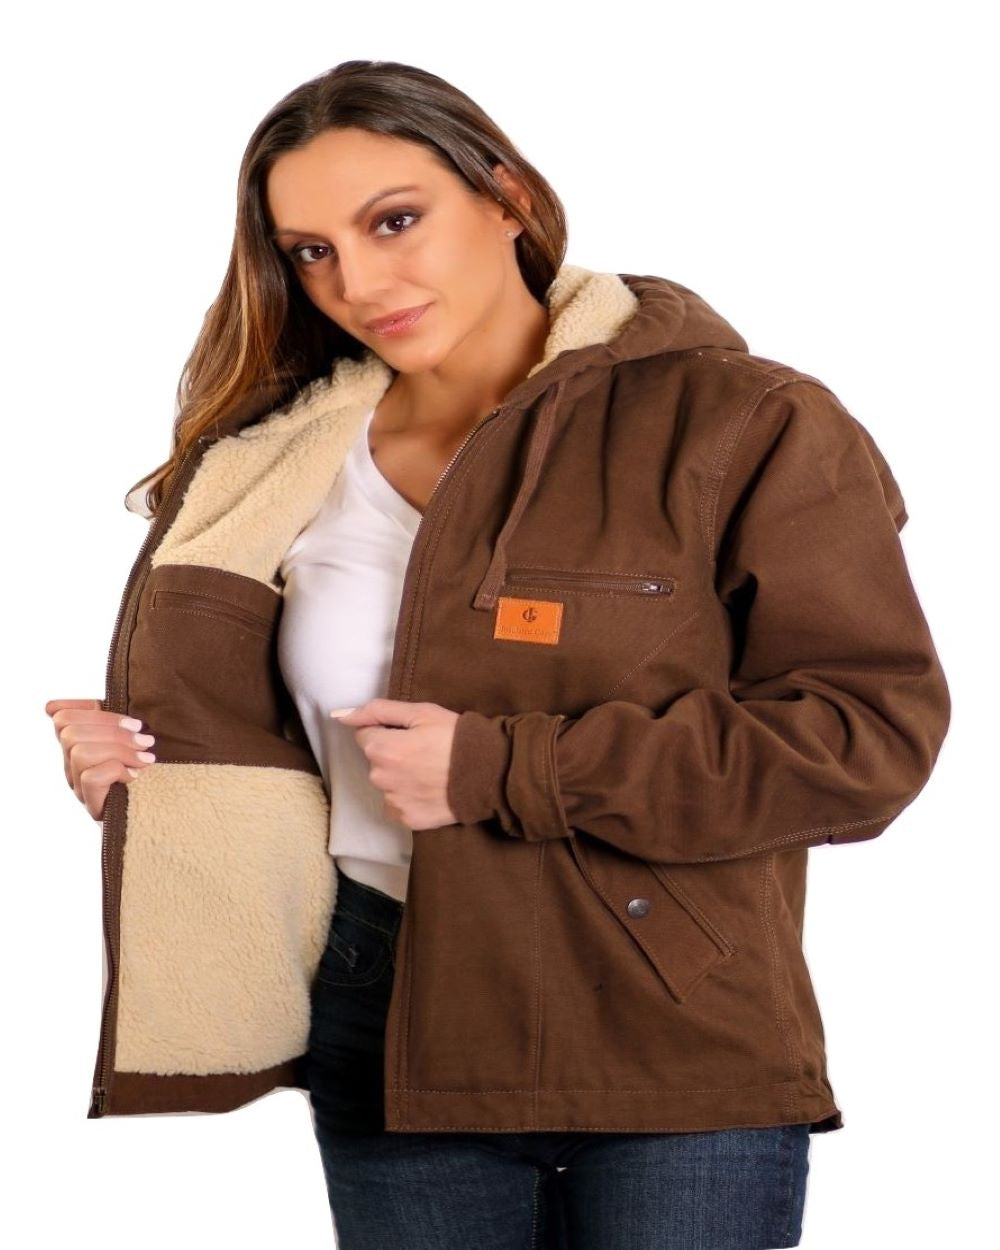 Women’s Insulated Work Jackets – Insulated Gear